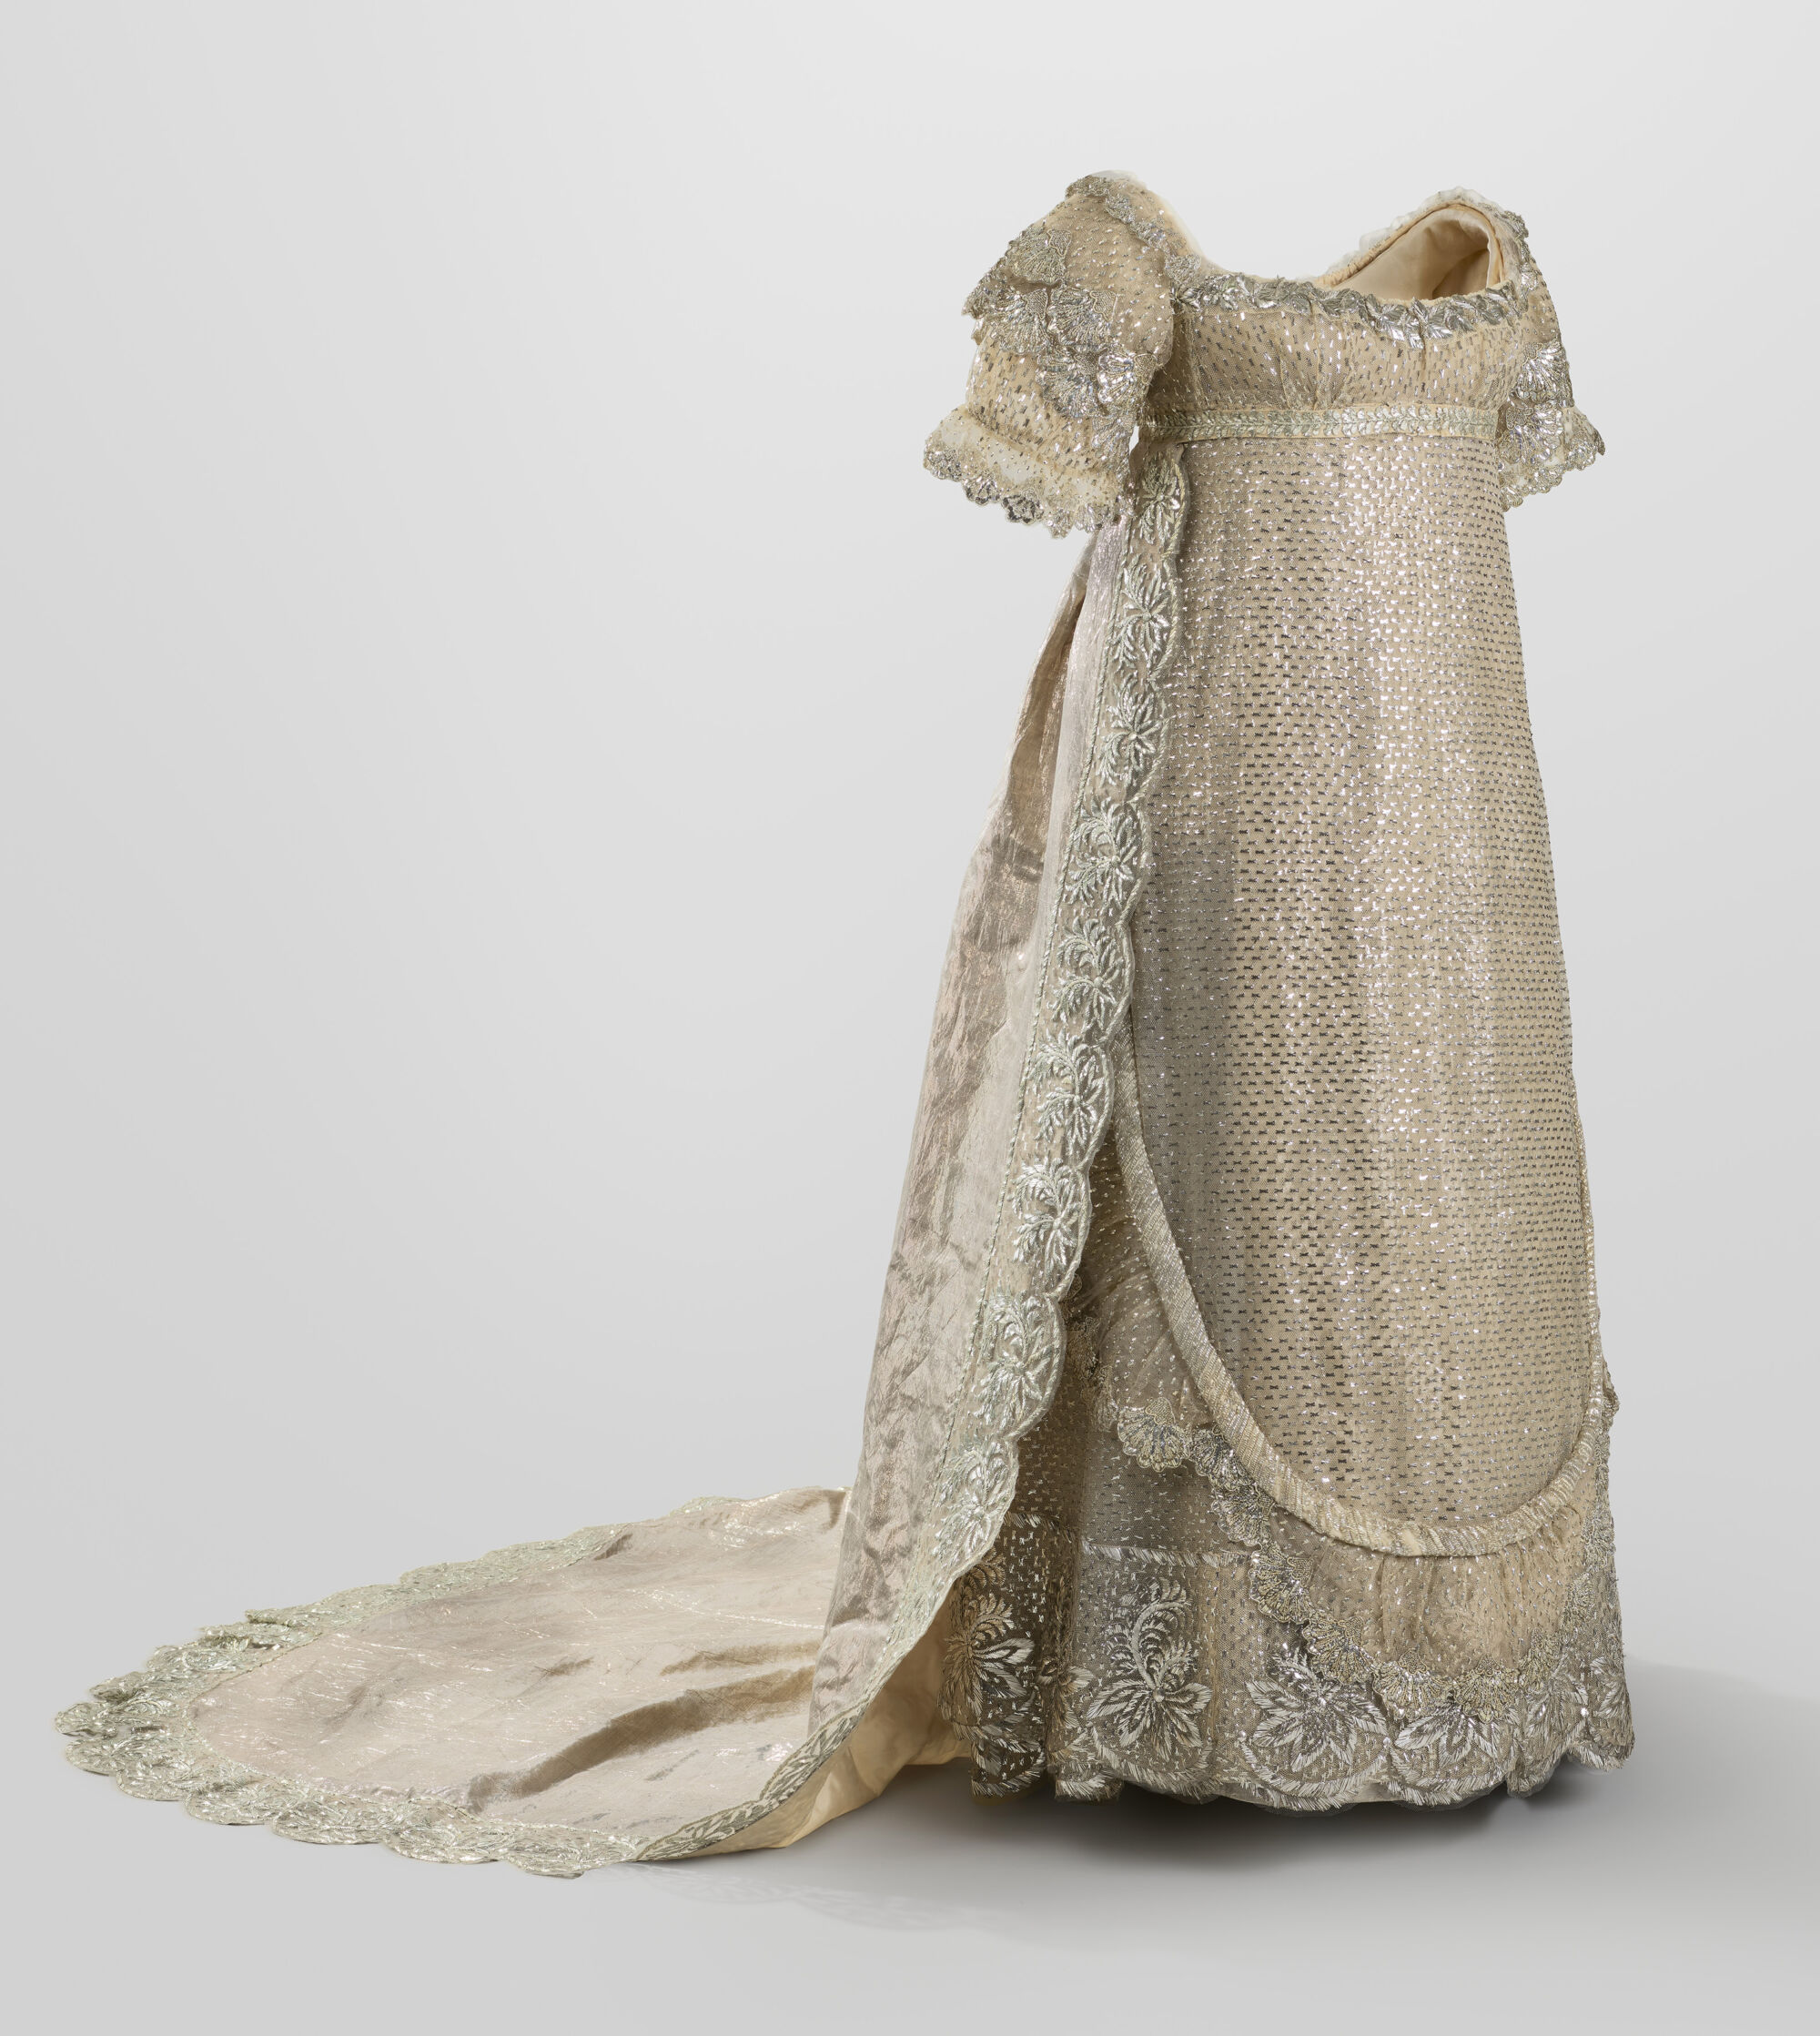 The Wick - Princess Charlotte's Wedding Dress